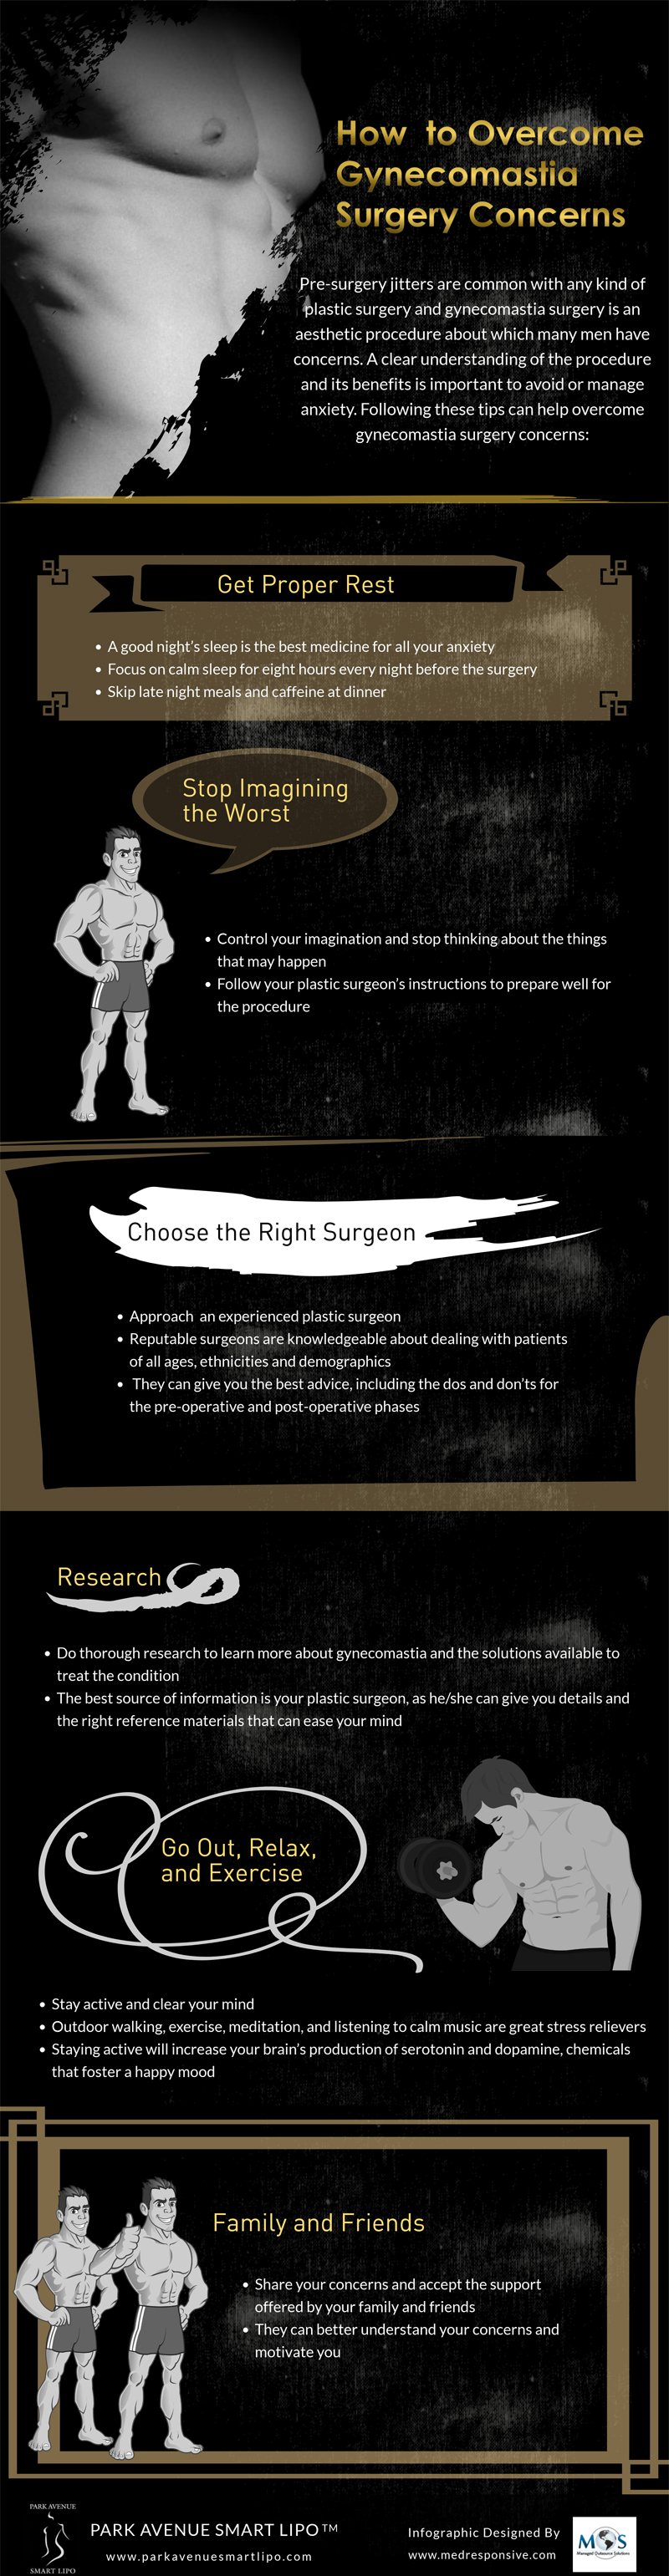 How to Overcome Gynecomastia Surgery Concerns